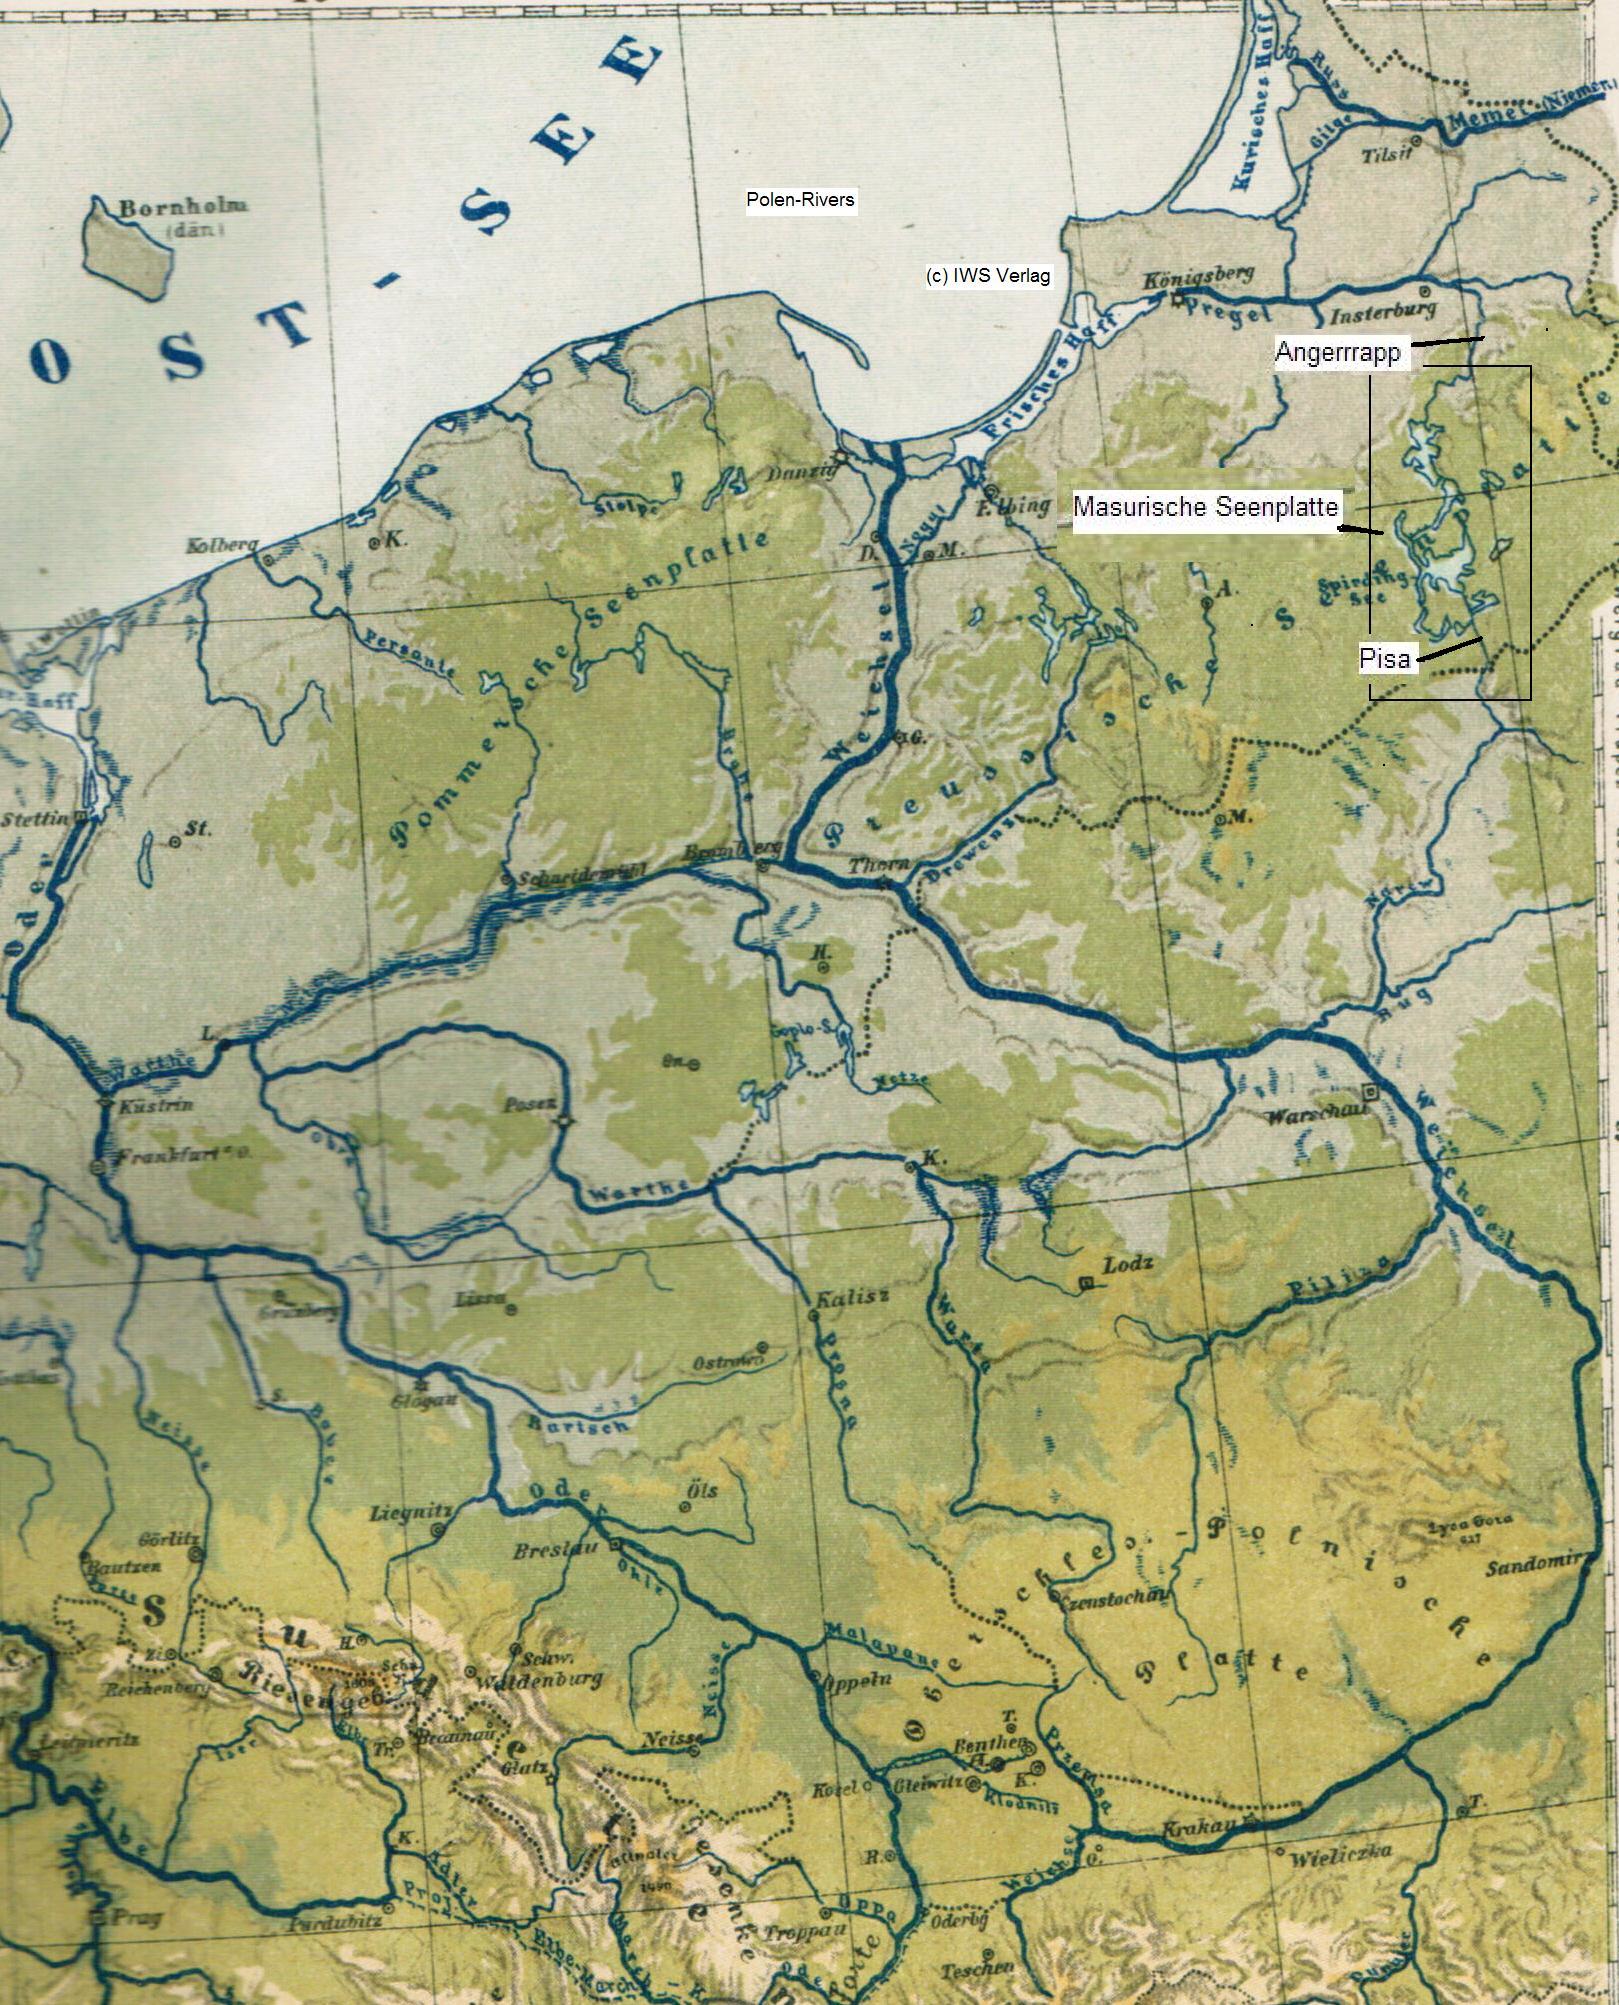 Polen-Rivers, Masurische Seenplatte, (c) Artaria/IWS Verlag